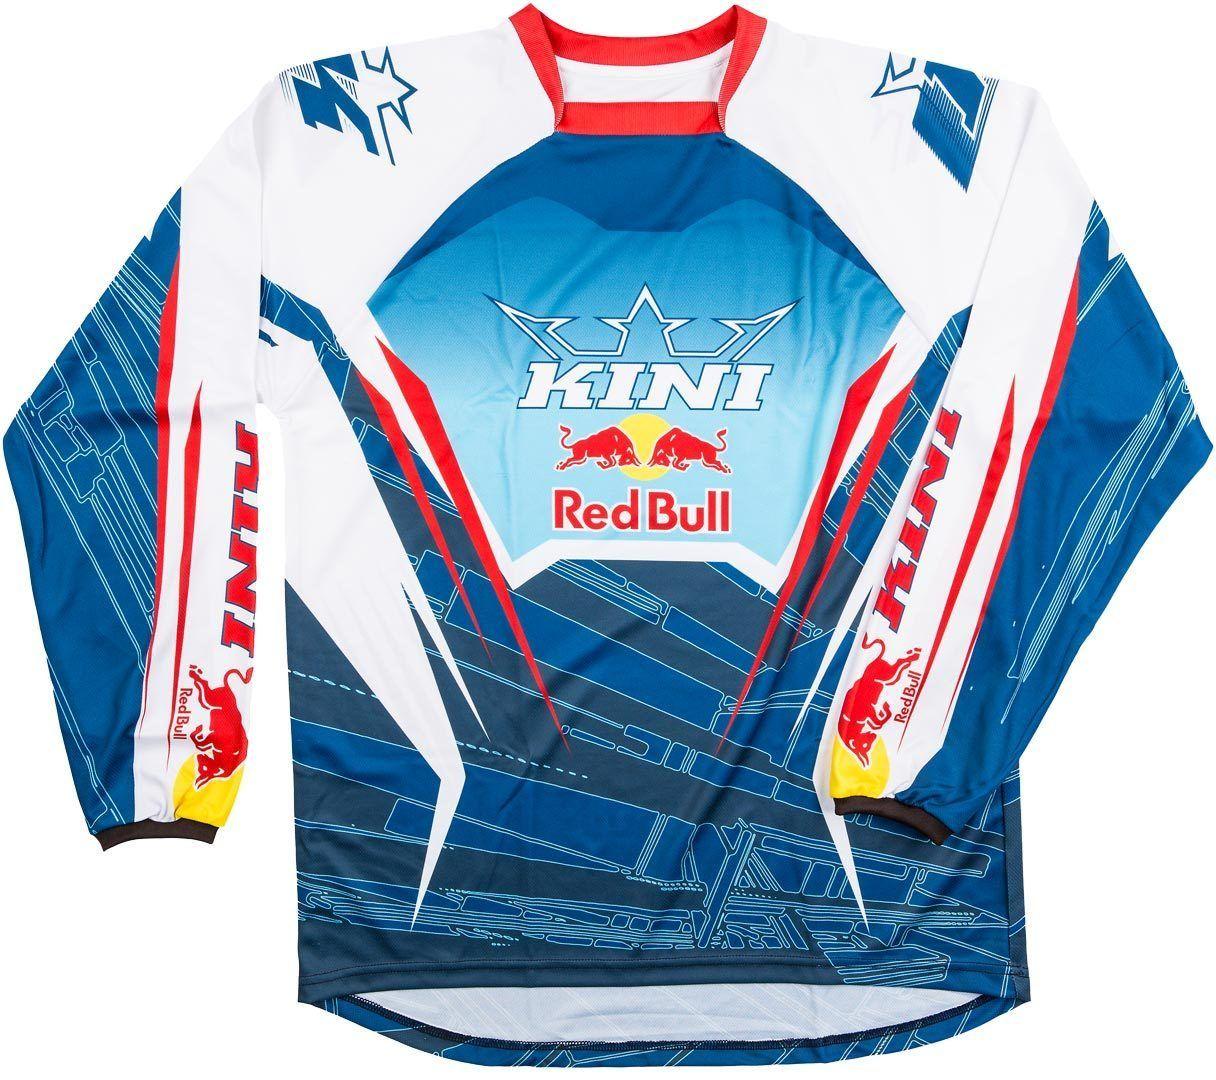 Blue White and Red Bull Logo - Kini Red Bull Competition Jersey Jerseys Blue / White,kini red bull ...